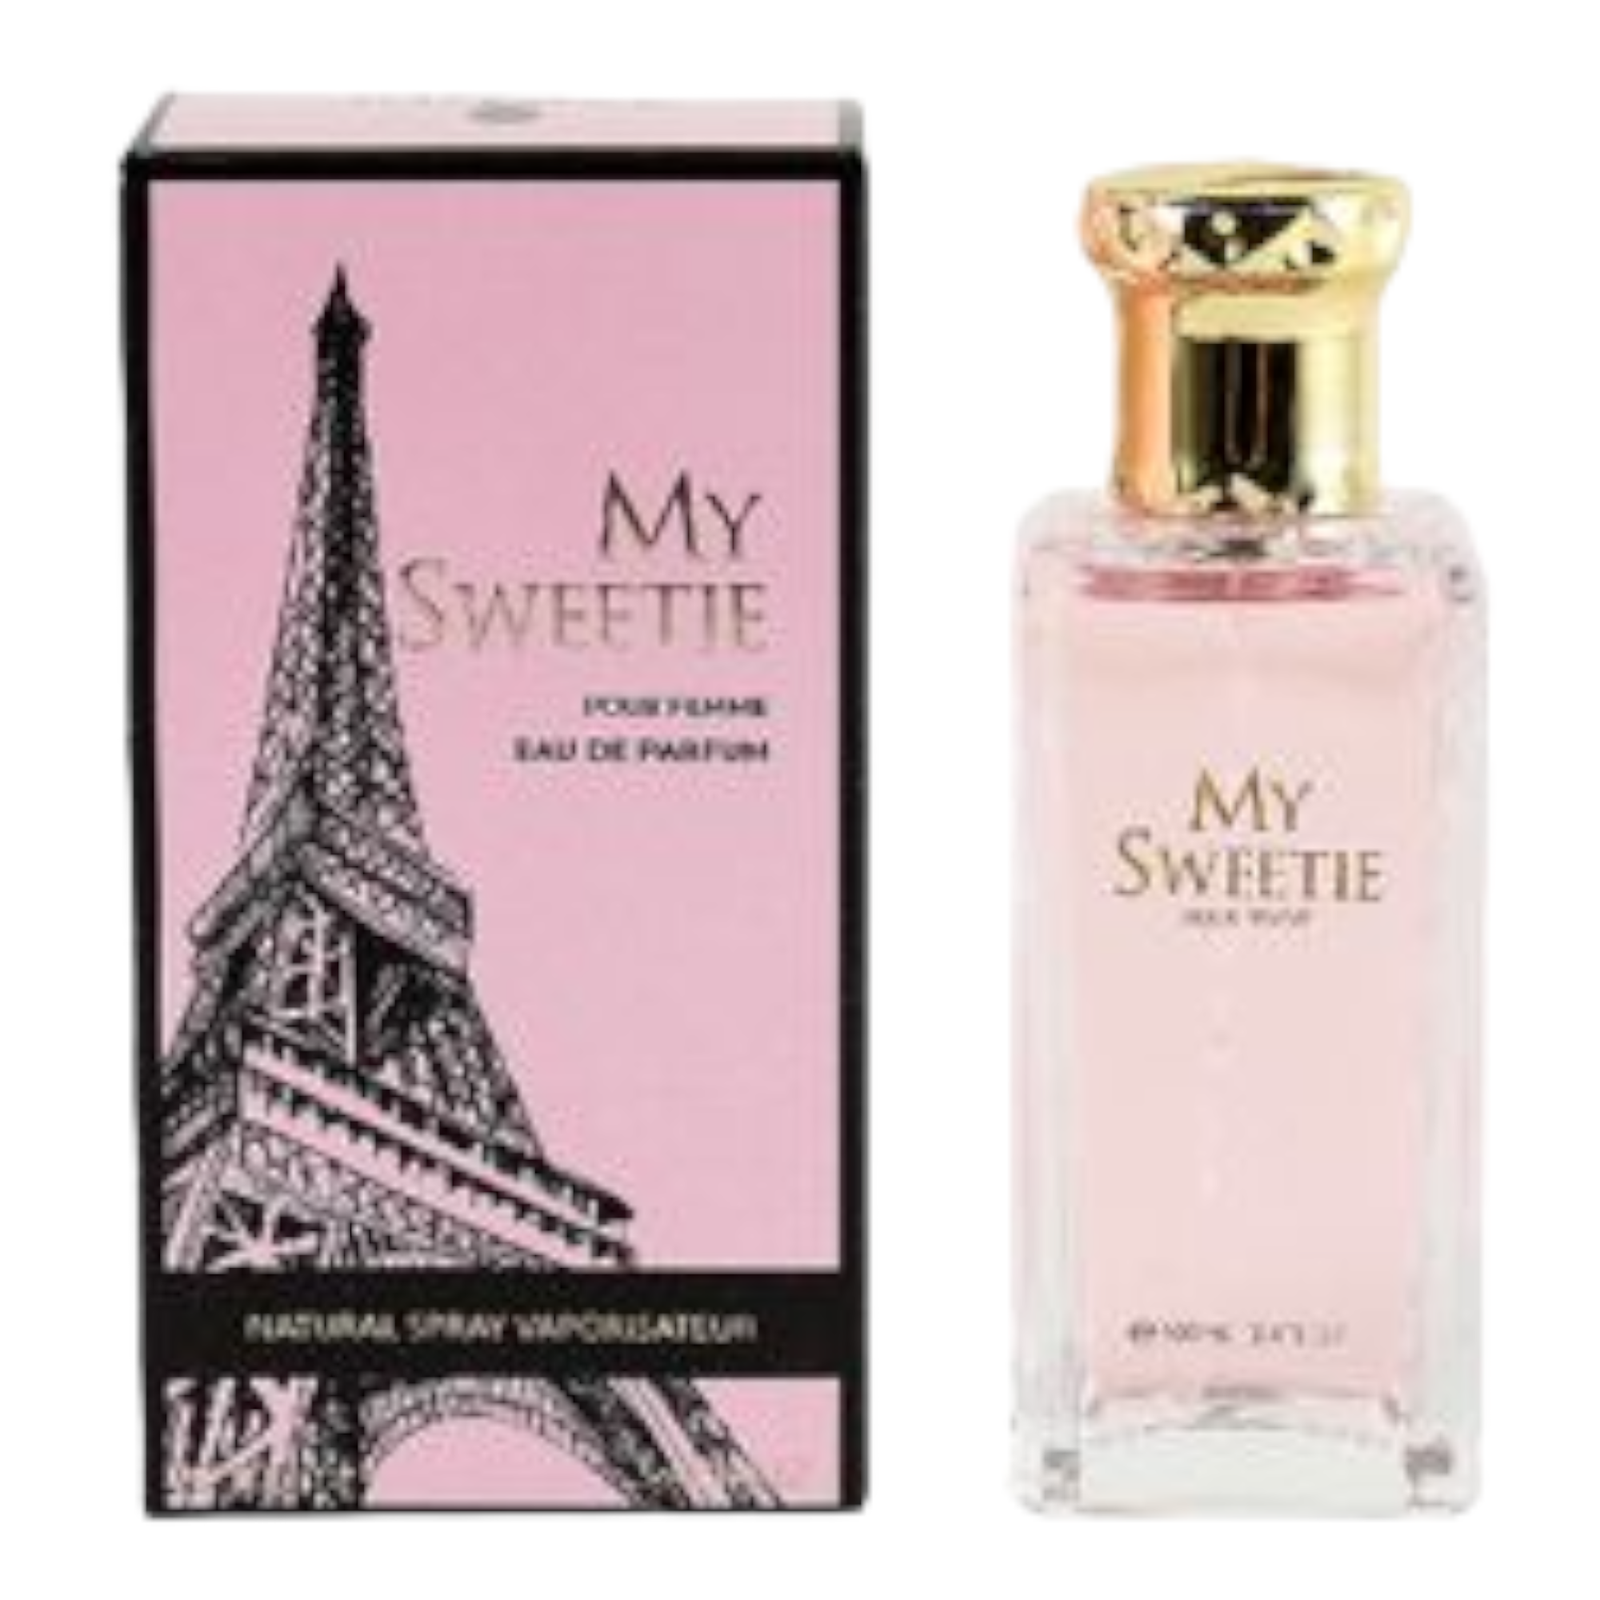 MY SWEETE PERFUME por mayor - Perfumes por mayor